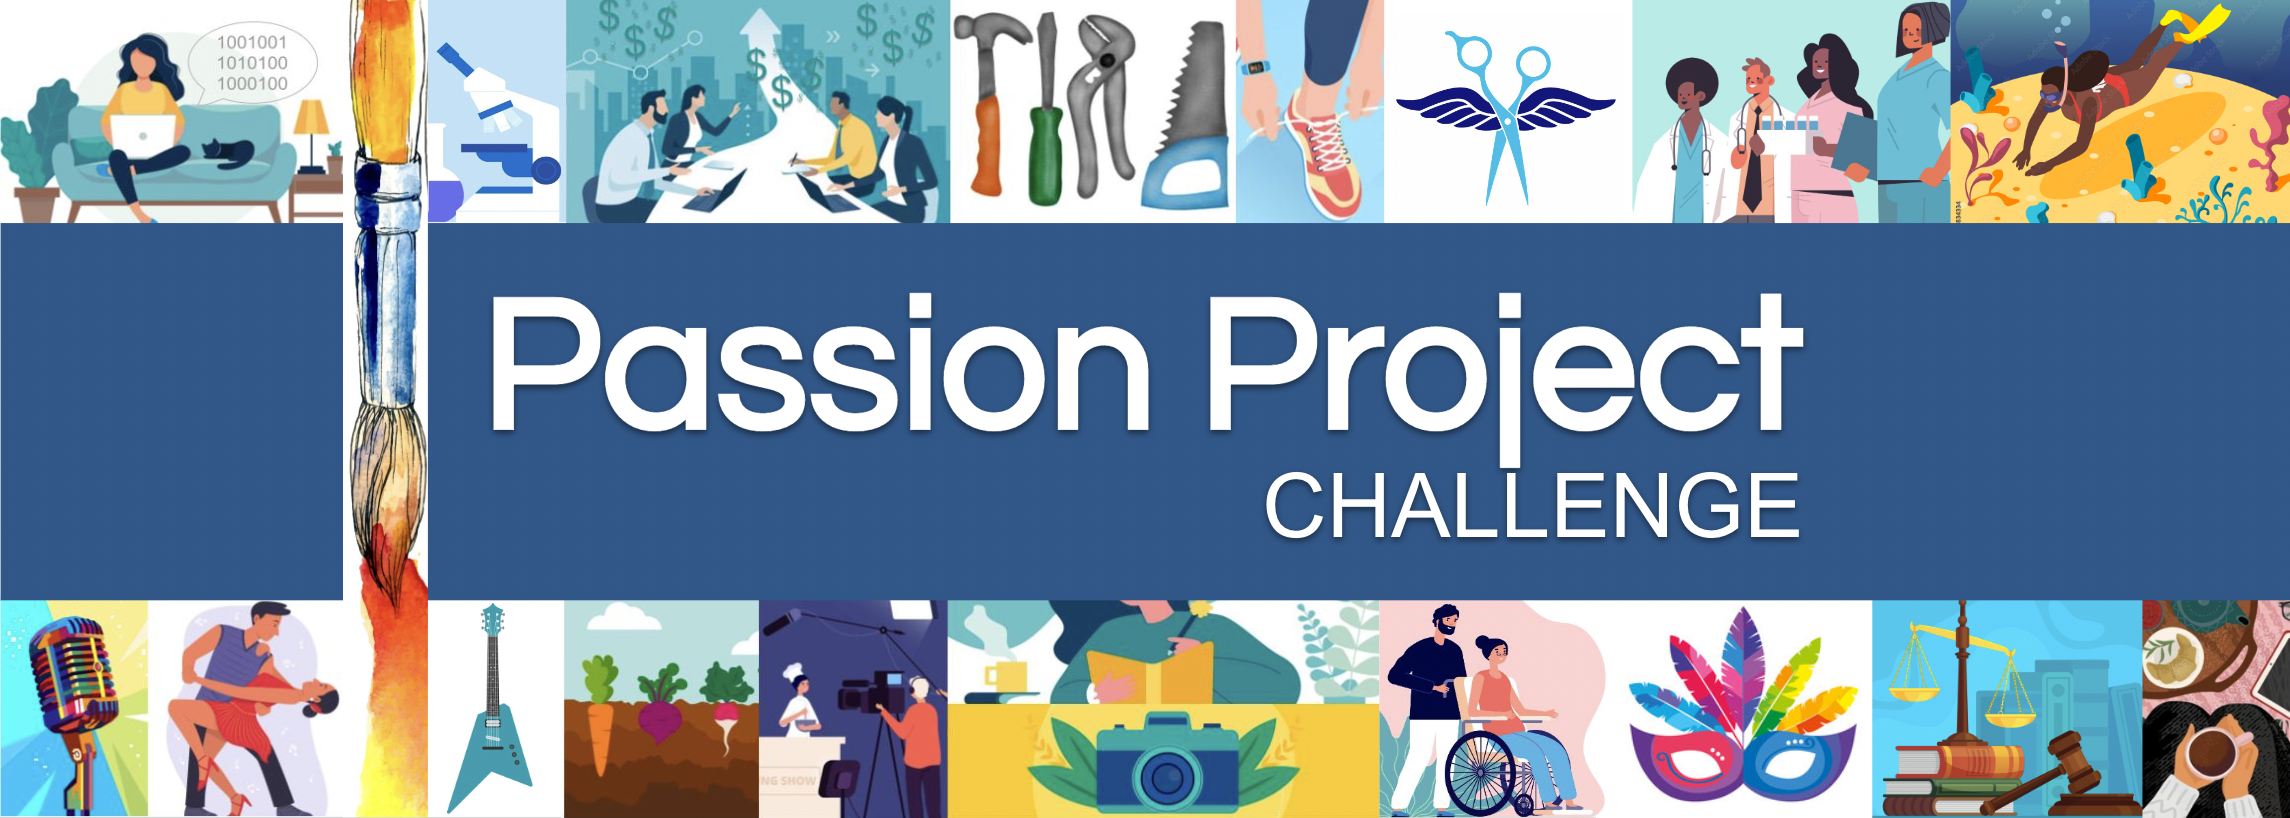 Passion Project Challenge decorative image